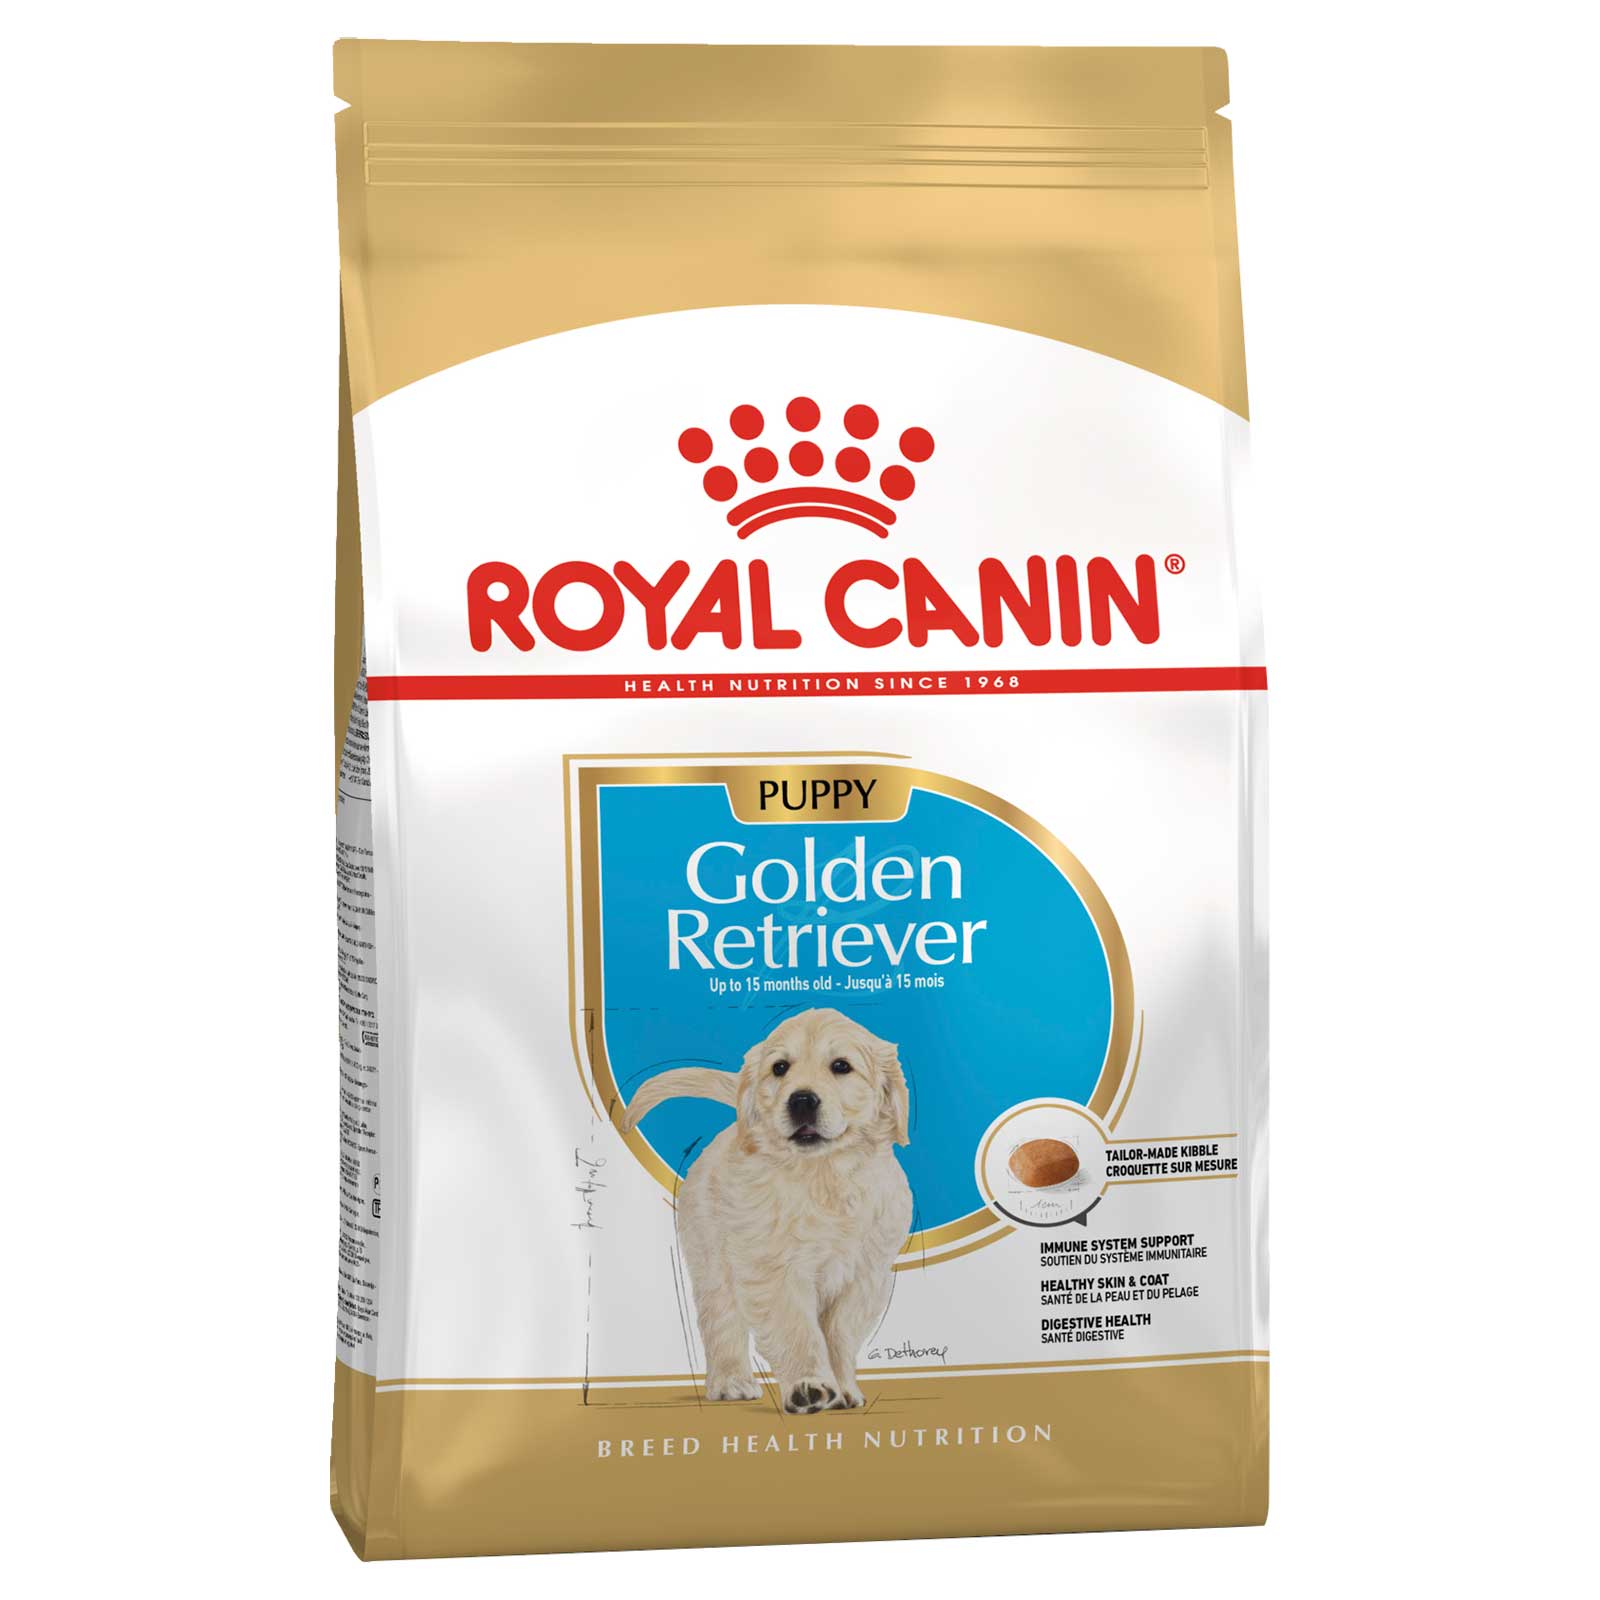 Royal Canin Dog Food Puppy Golden Retriever